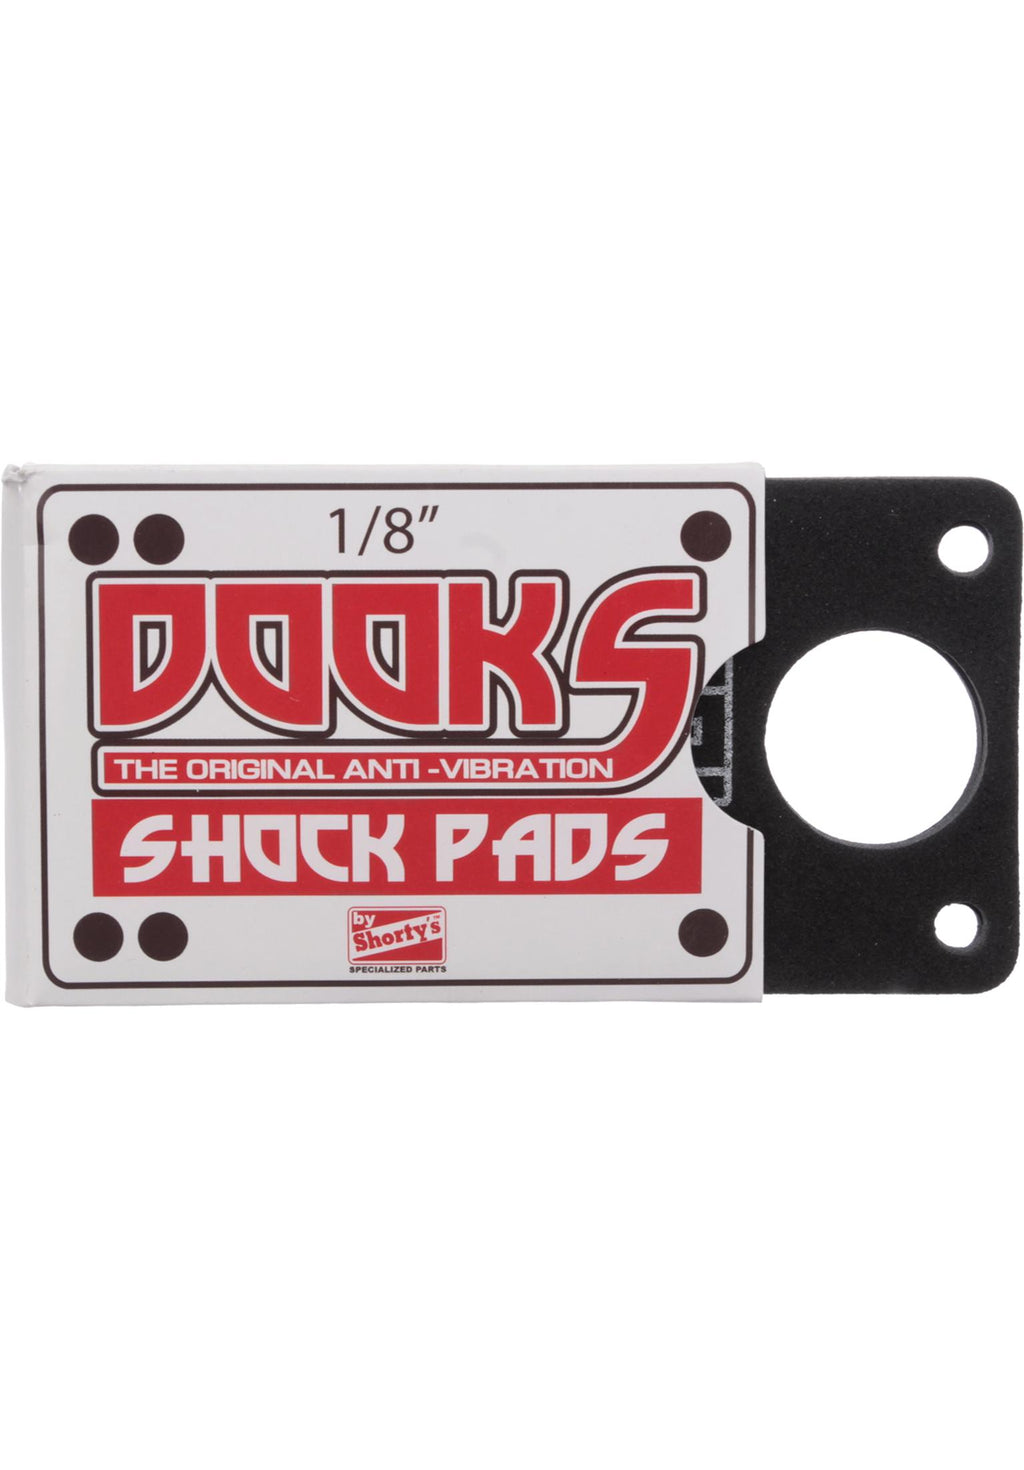 DOOKS SHOCK PADS 1/8"